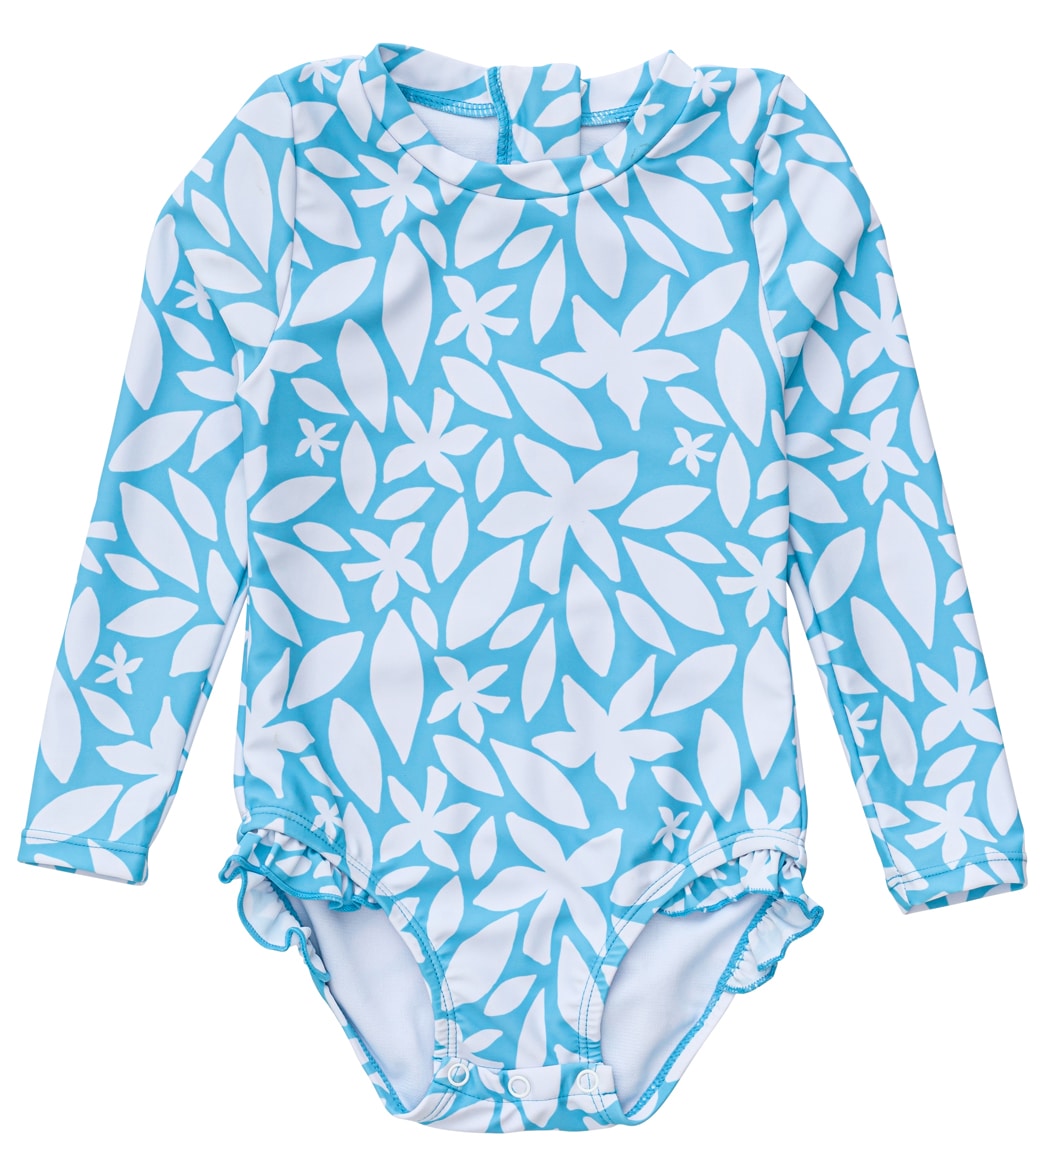 Snapper Rock Girls Aqua Bloom Sustainable LS Surf Suit (Baby, Toddler, Little Kid, Big Kid)